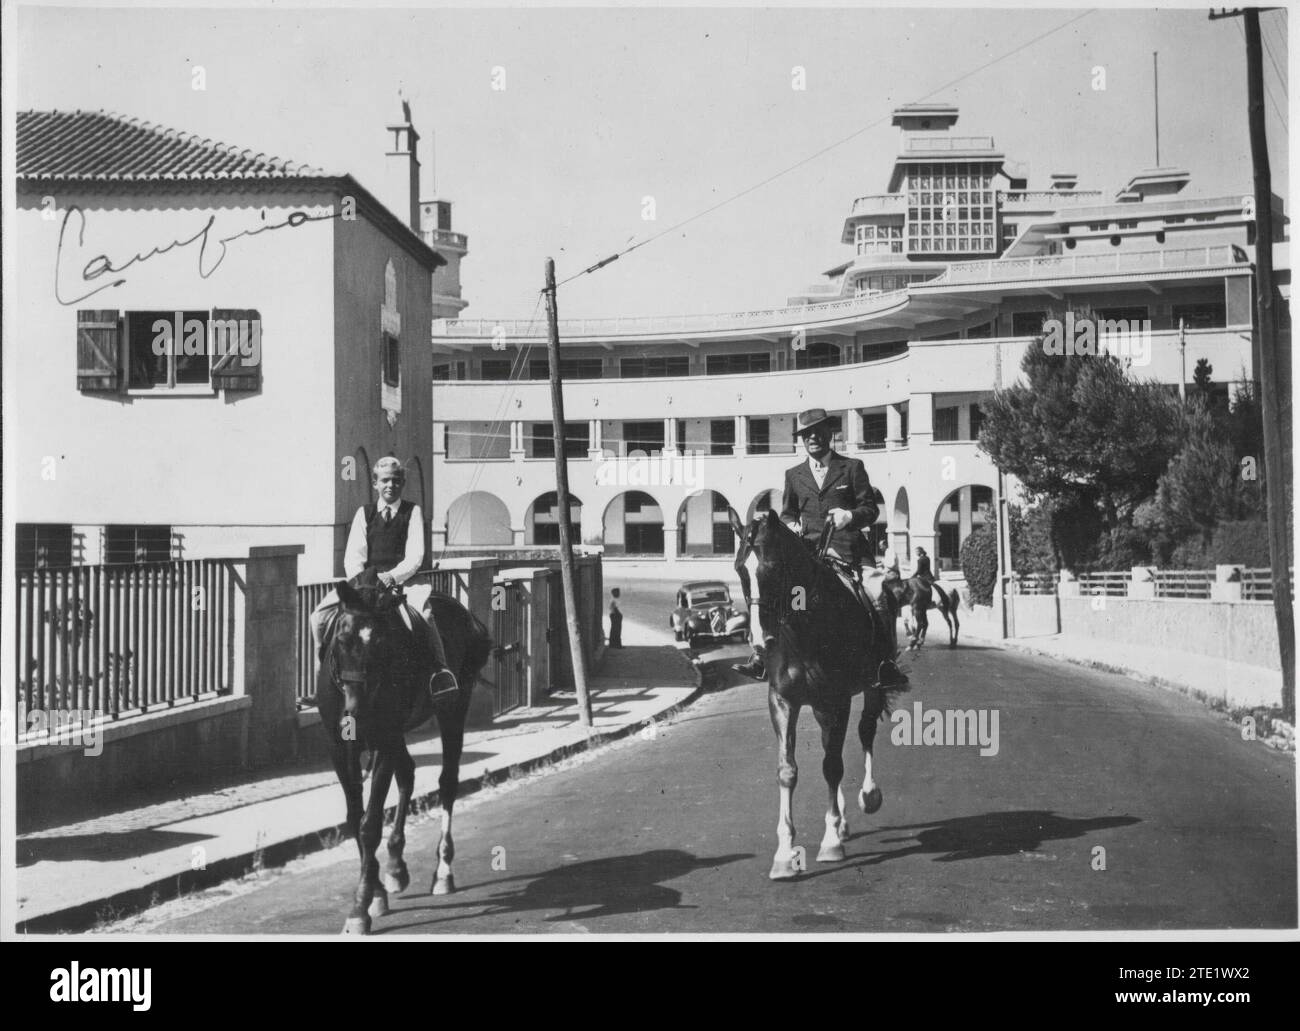 Estoril, 1950. Don Juan Carlos riding a horse through the streets of Estoril. Credit: Album / Archivo ABC / Campua Stock Photo